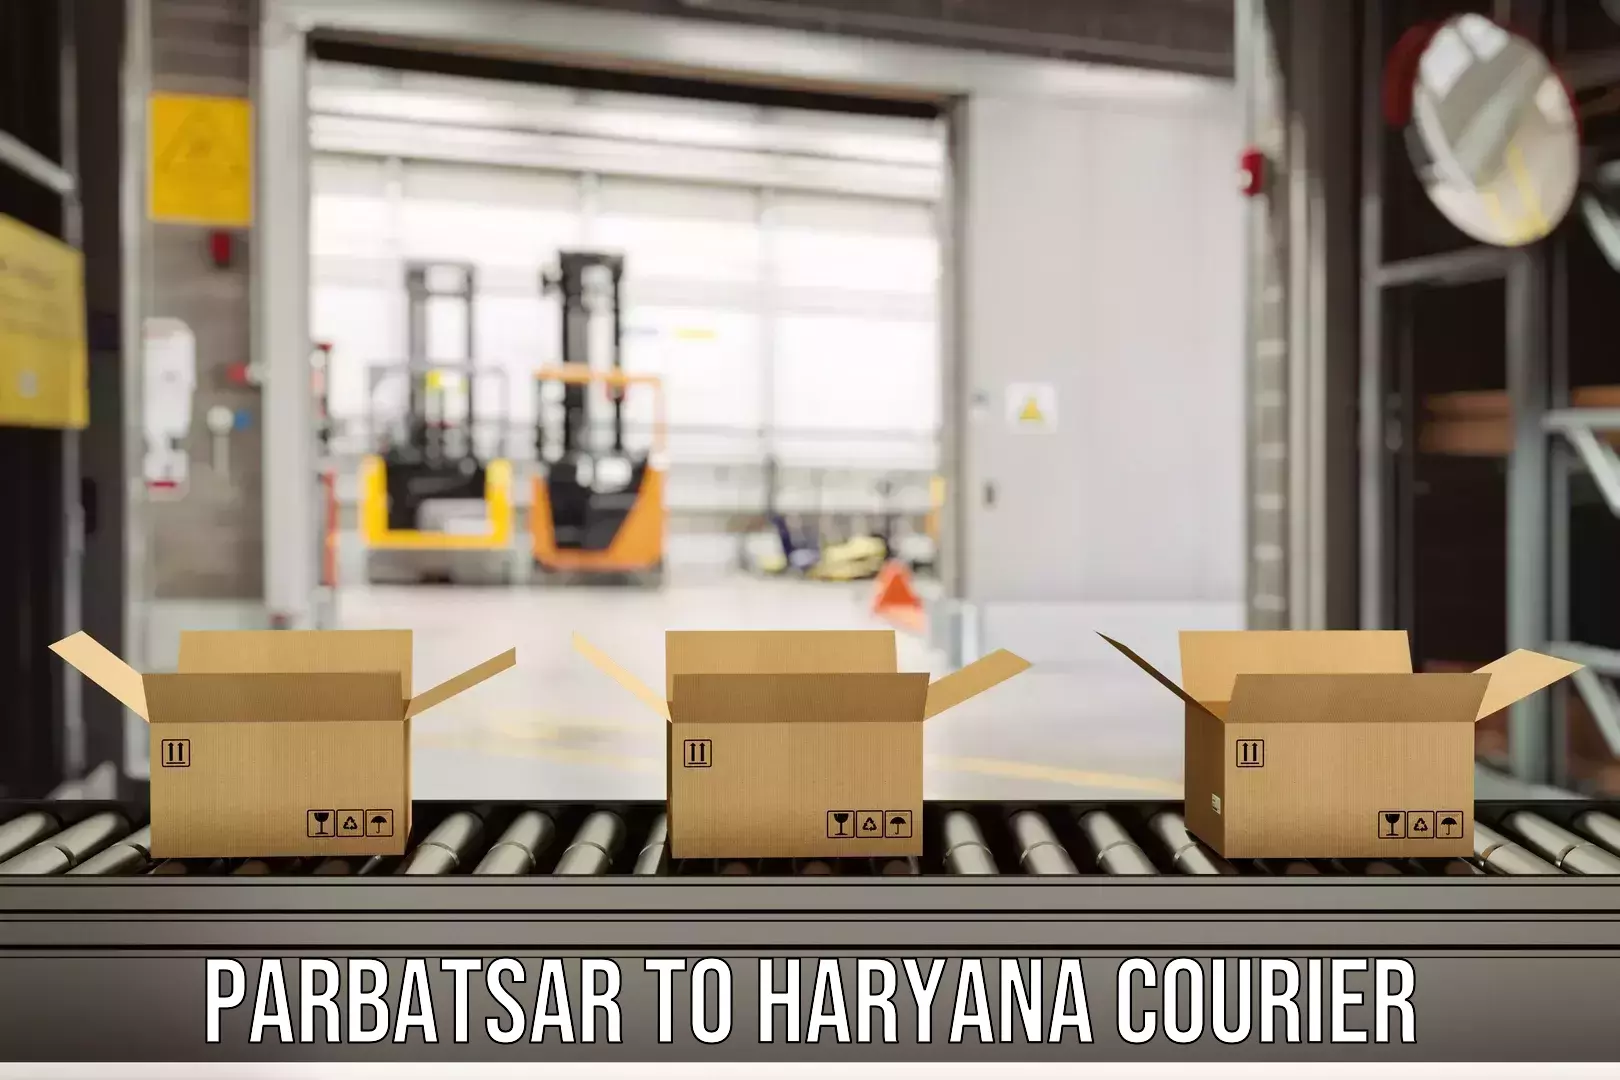 Courier service comparison Parbatsar to Bahadurgarh